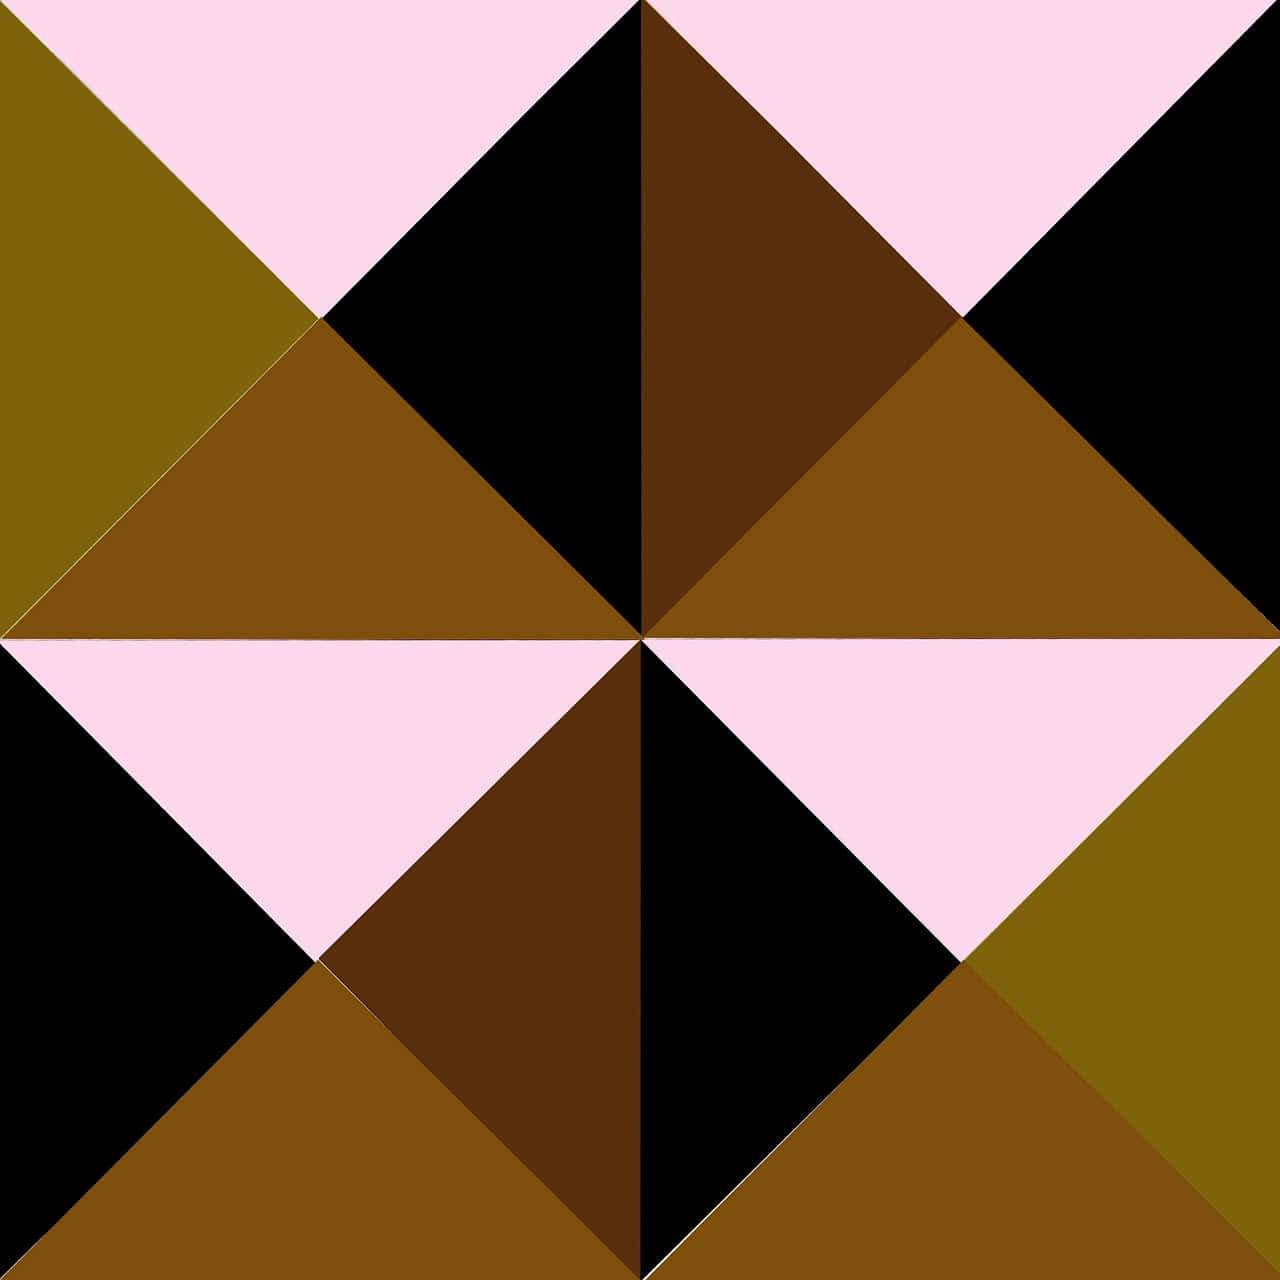 Brown Geometric 1280 X 1280 Wallpaper Wallpaper